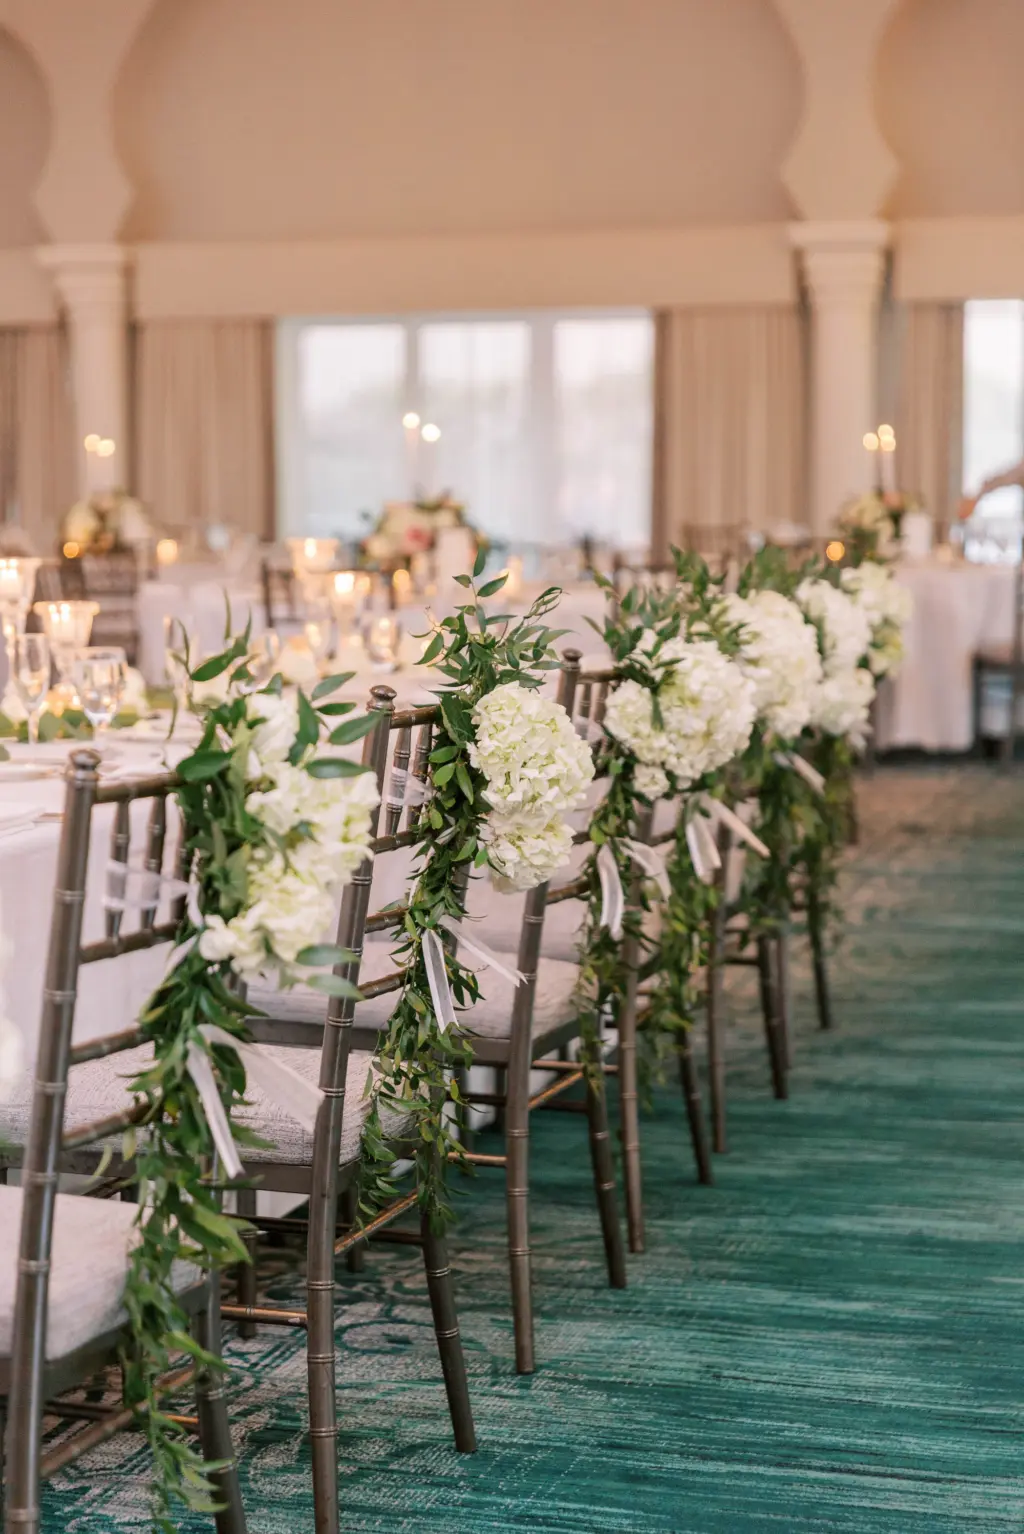 Black Chiavari Chairs with Cream and Greenery Flowers | Elegant Wedding Reception Decor Inspiration